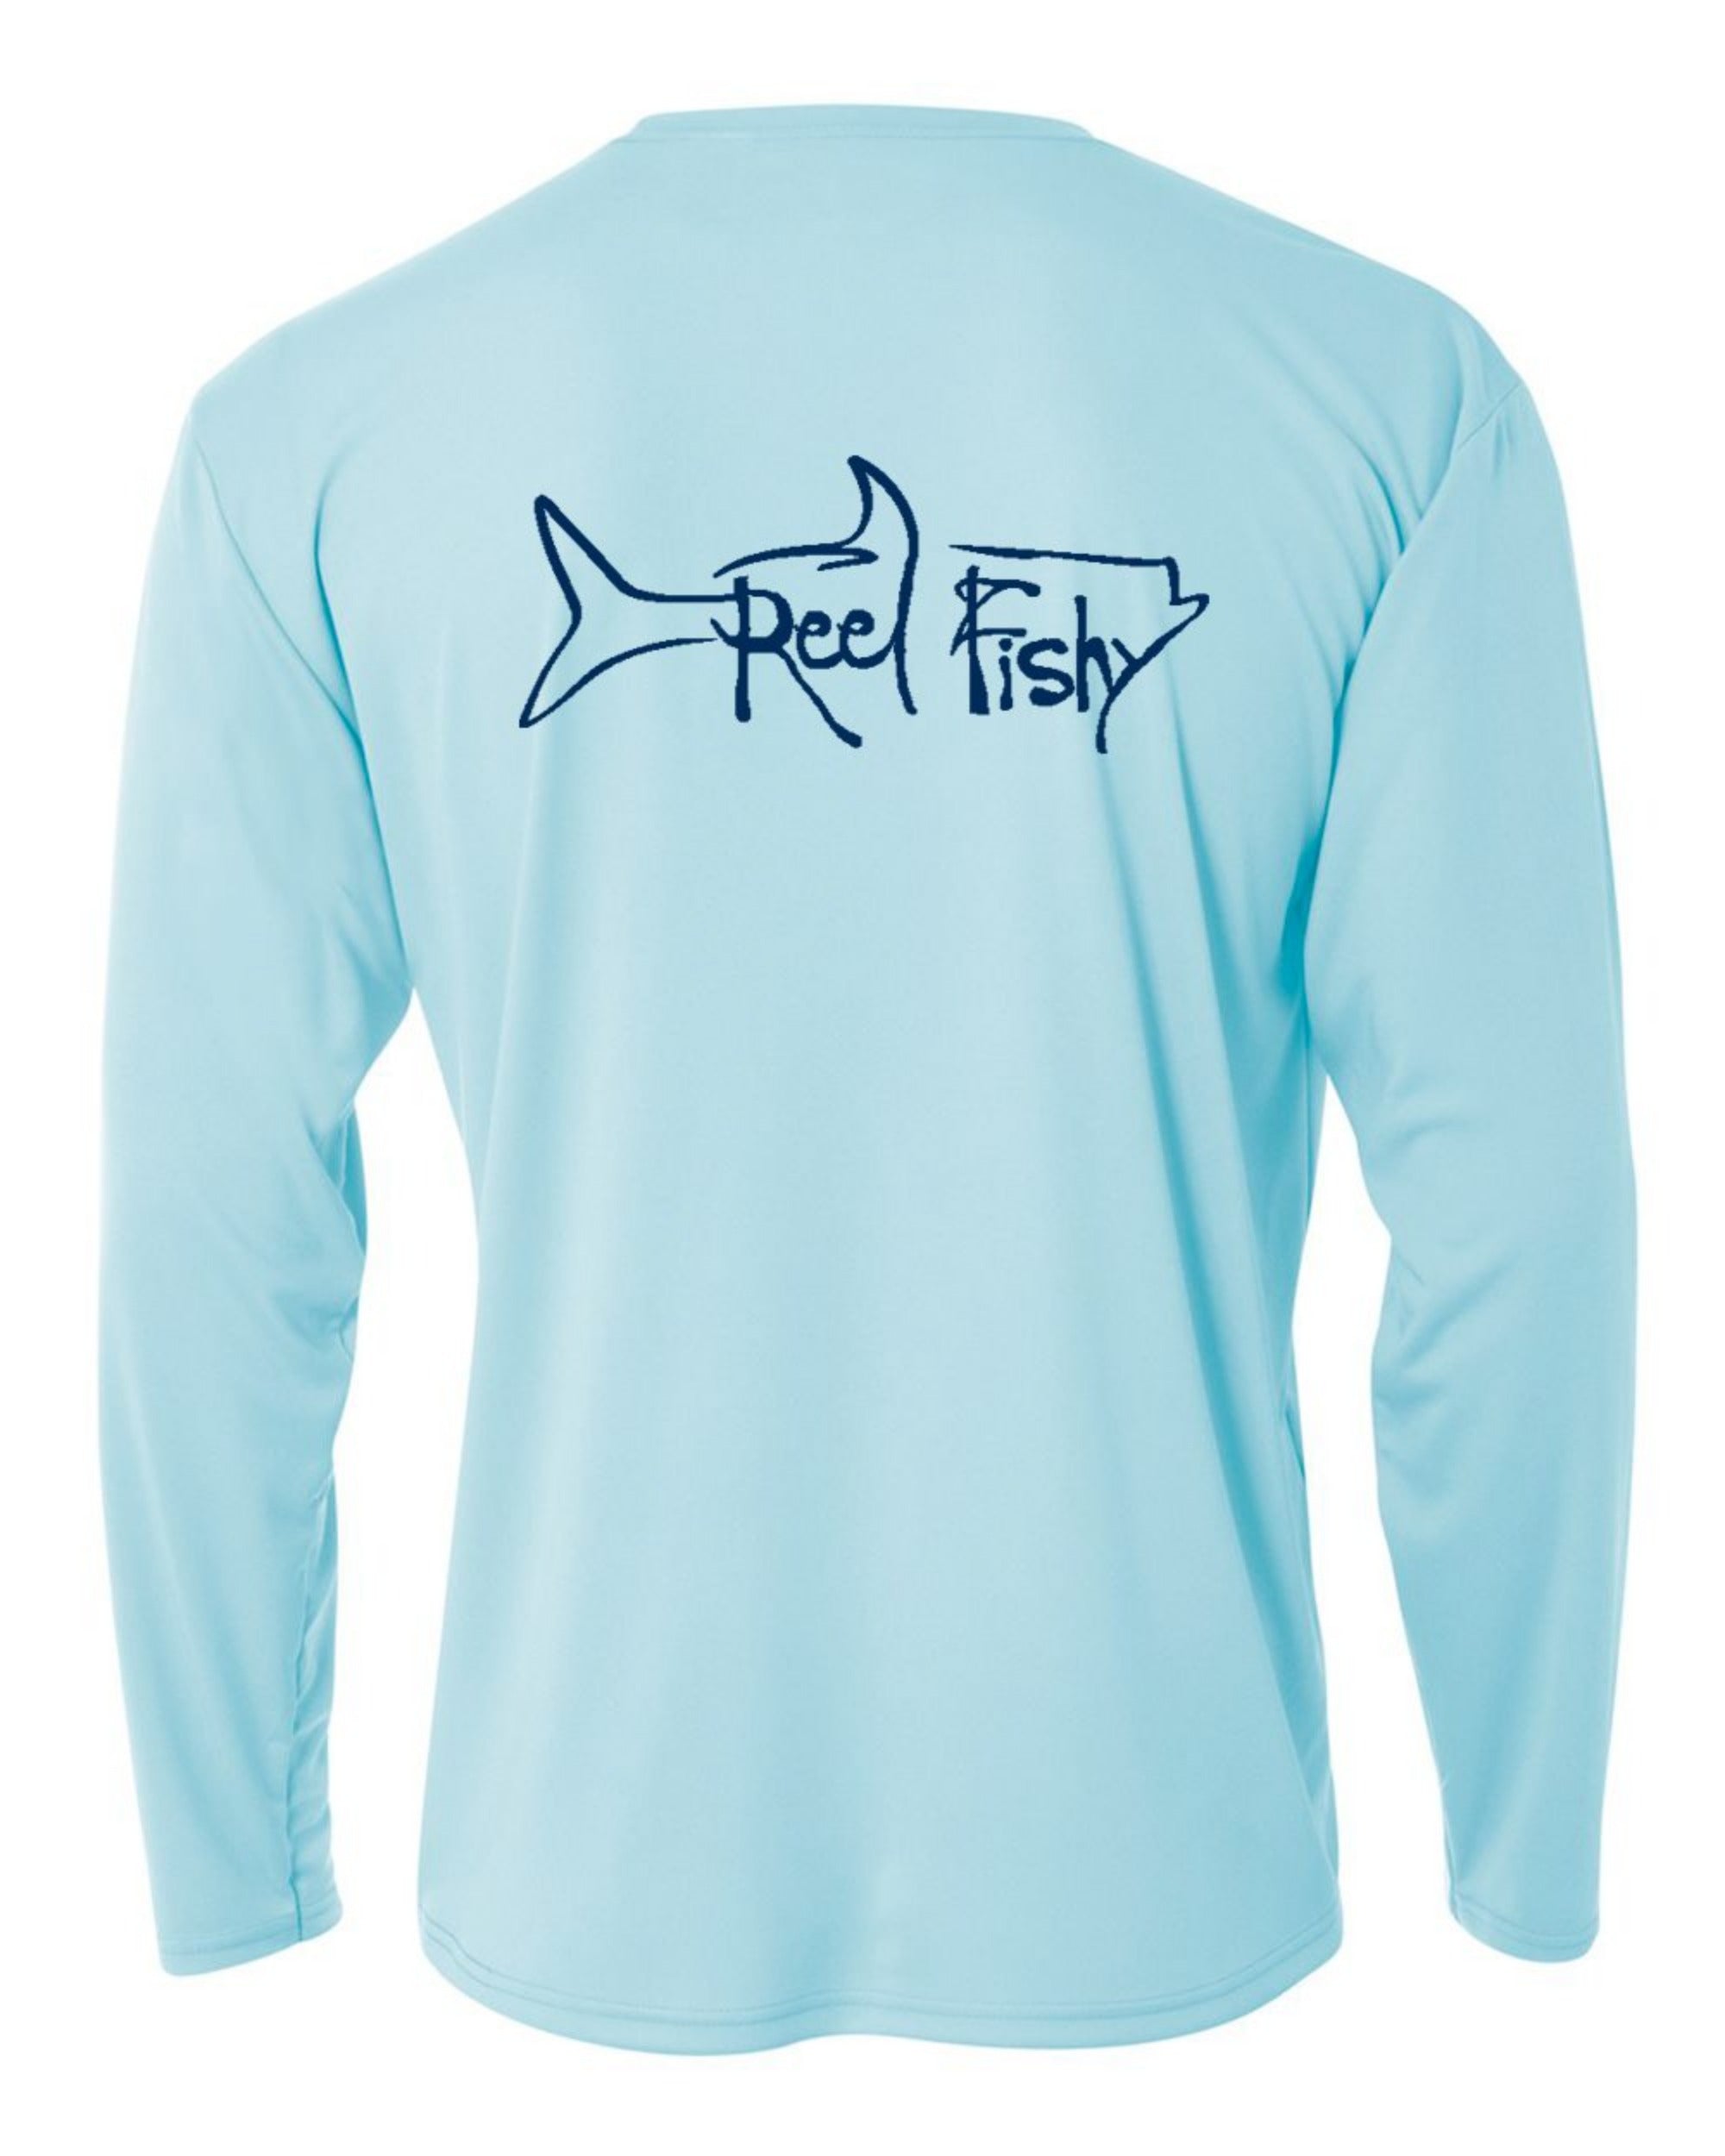 Youth Performance Dry-Fit Tarpon Fishing Shirts 50+Upf Sun Protection - Reel Fishy Apparel S / Lt. Blue L/S